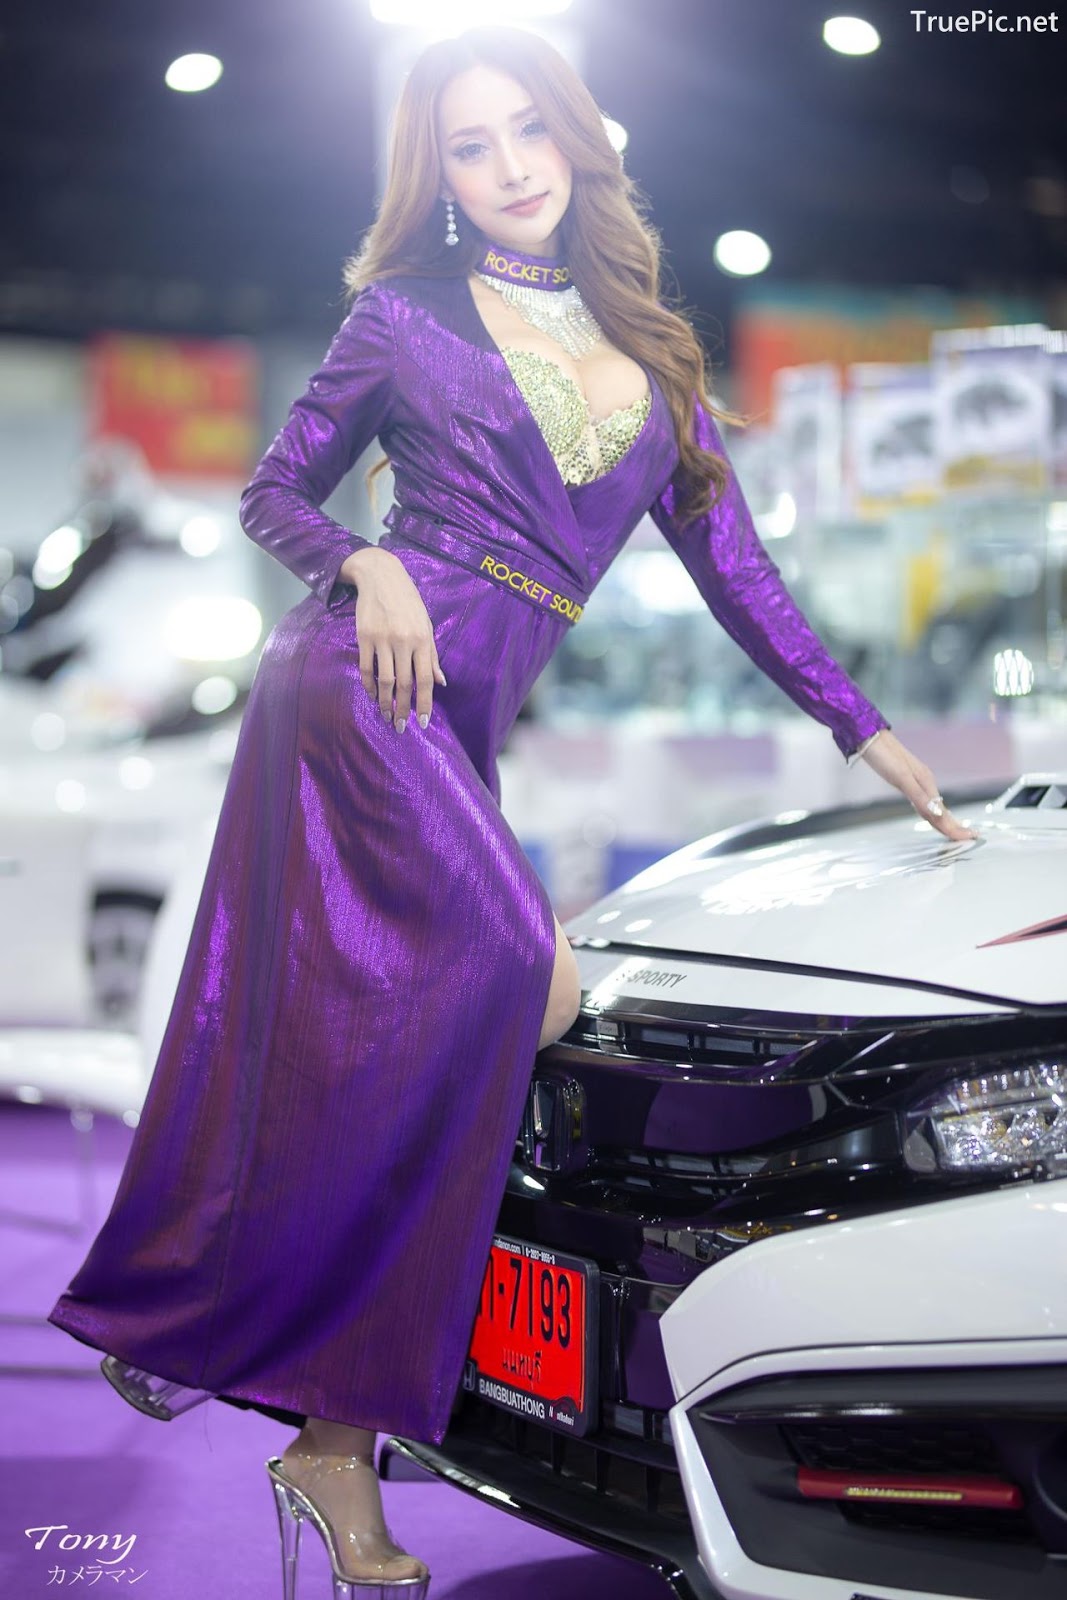 Image-Thailand-Hot-Model-Thai-Racing-Girl-At-Big-Motor-2018-TruePic.net- Picture-13